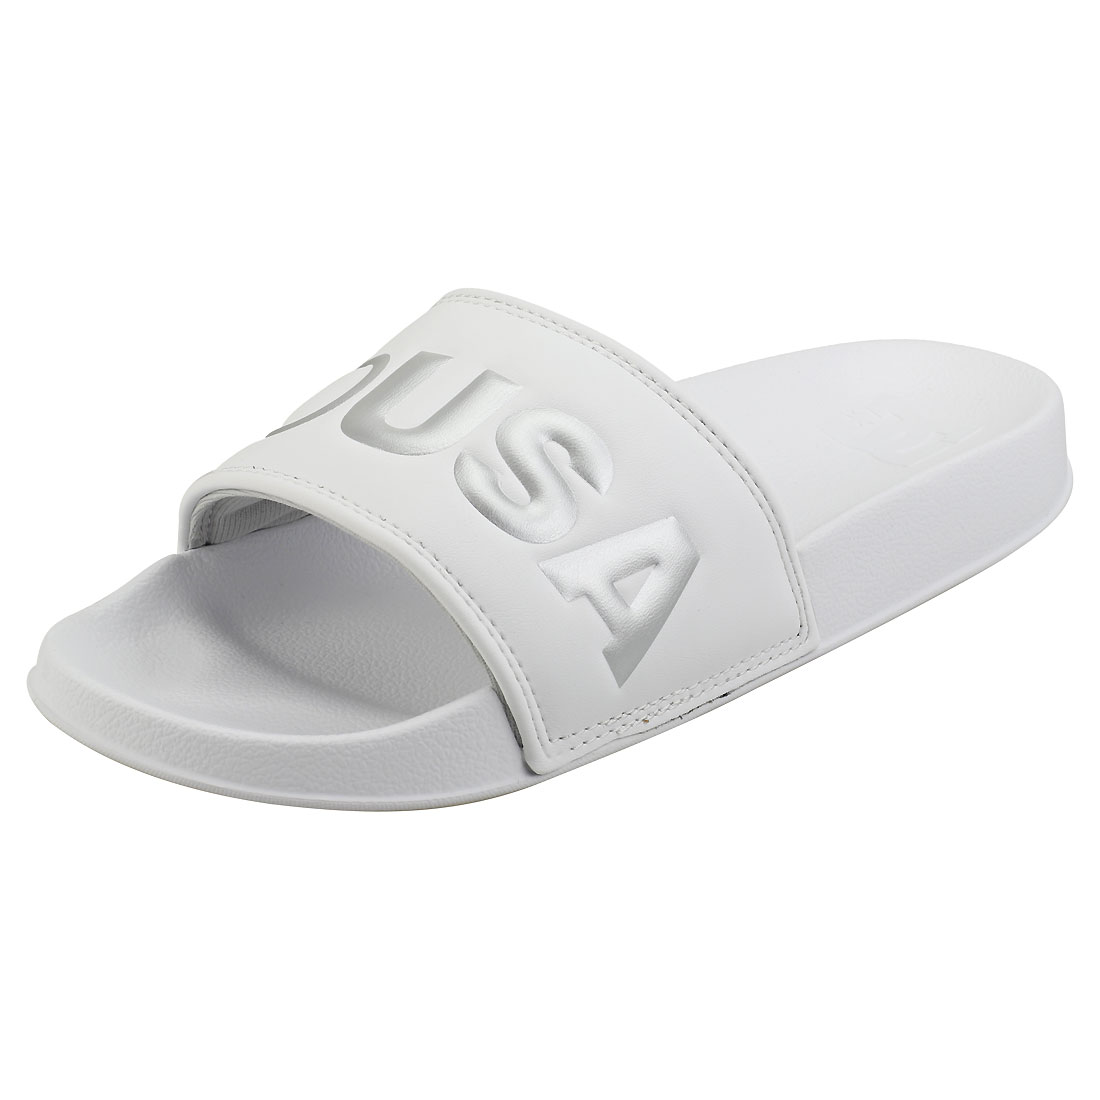 silver slide sandals womens